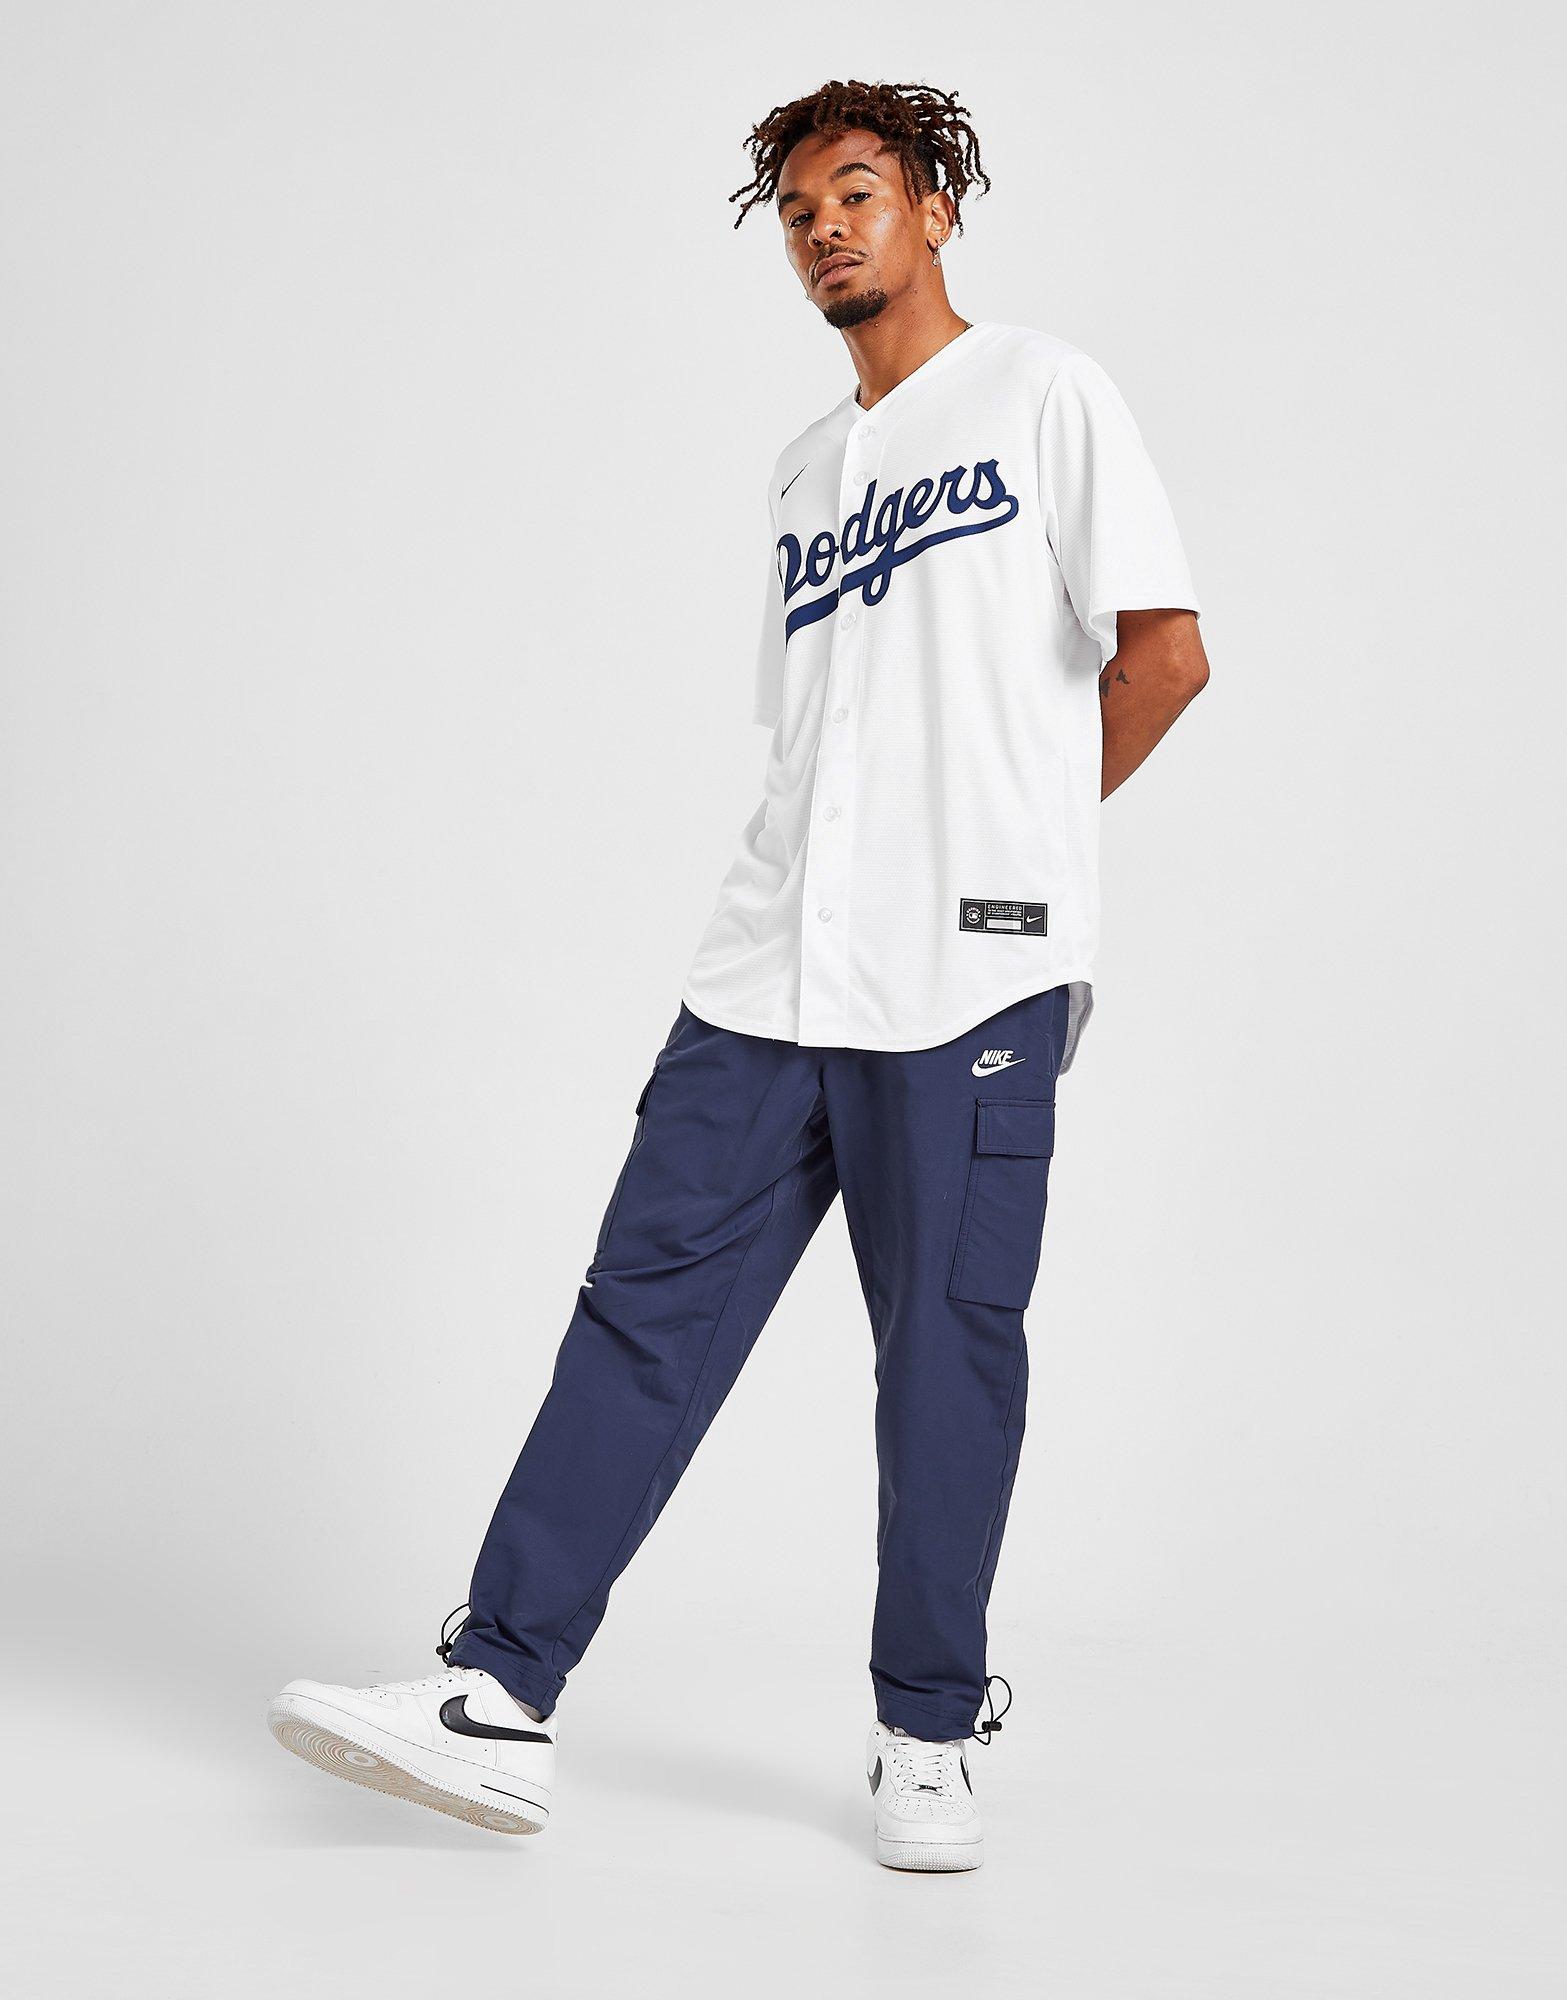 Nike SB x MLB Skate Dodgers Baseball jersey size L for Sale in